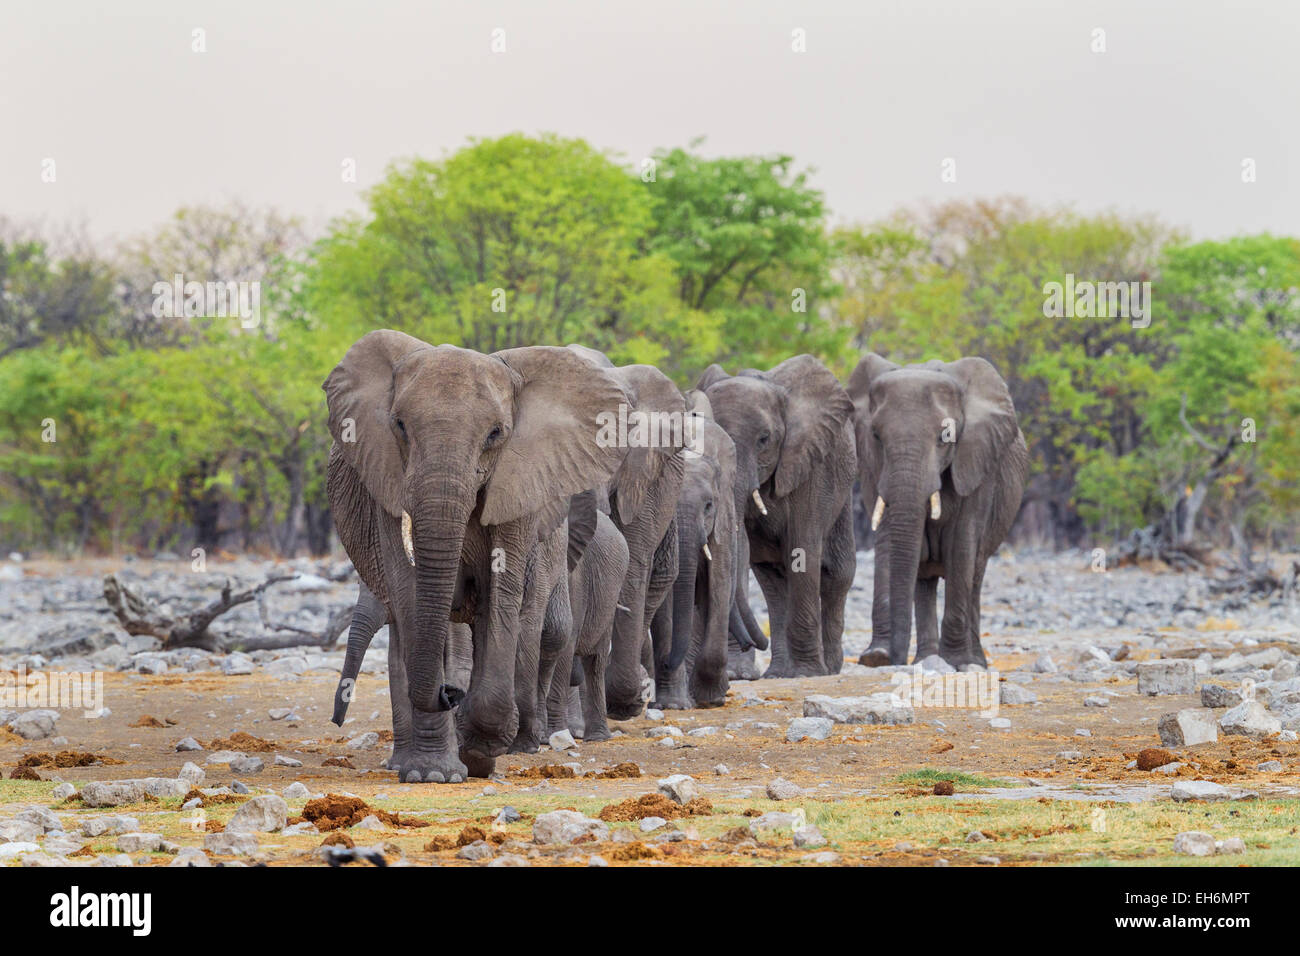 An elephant herd in Etosha National Park, Namibia. Stock Photo